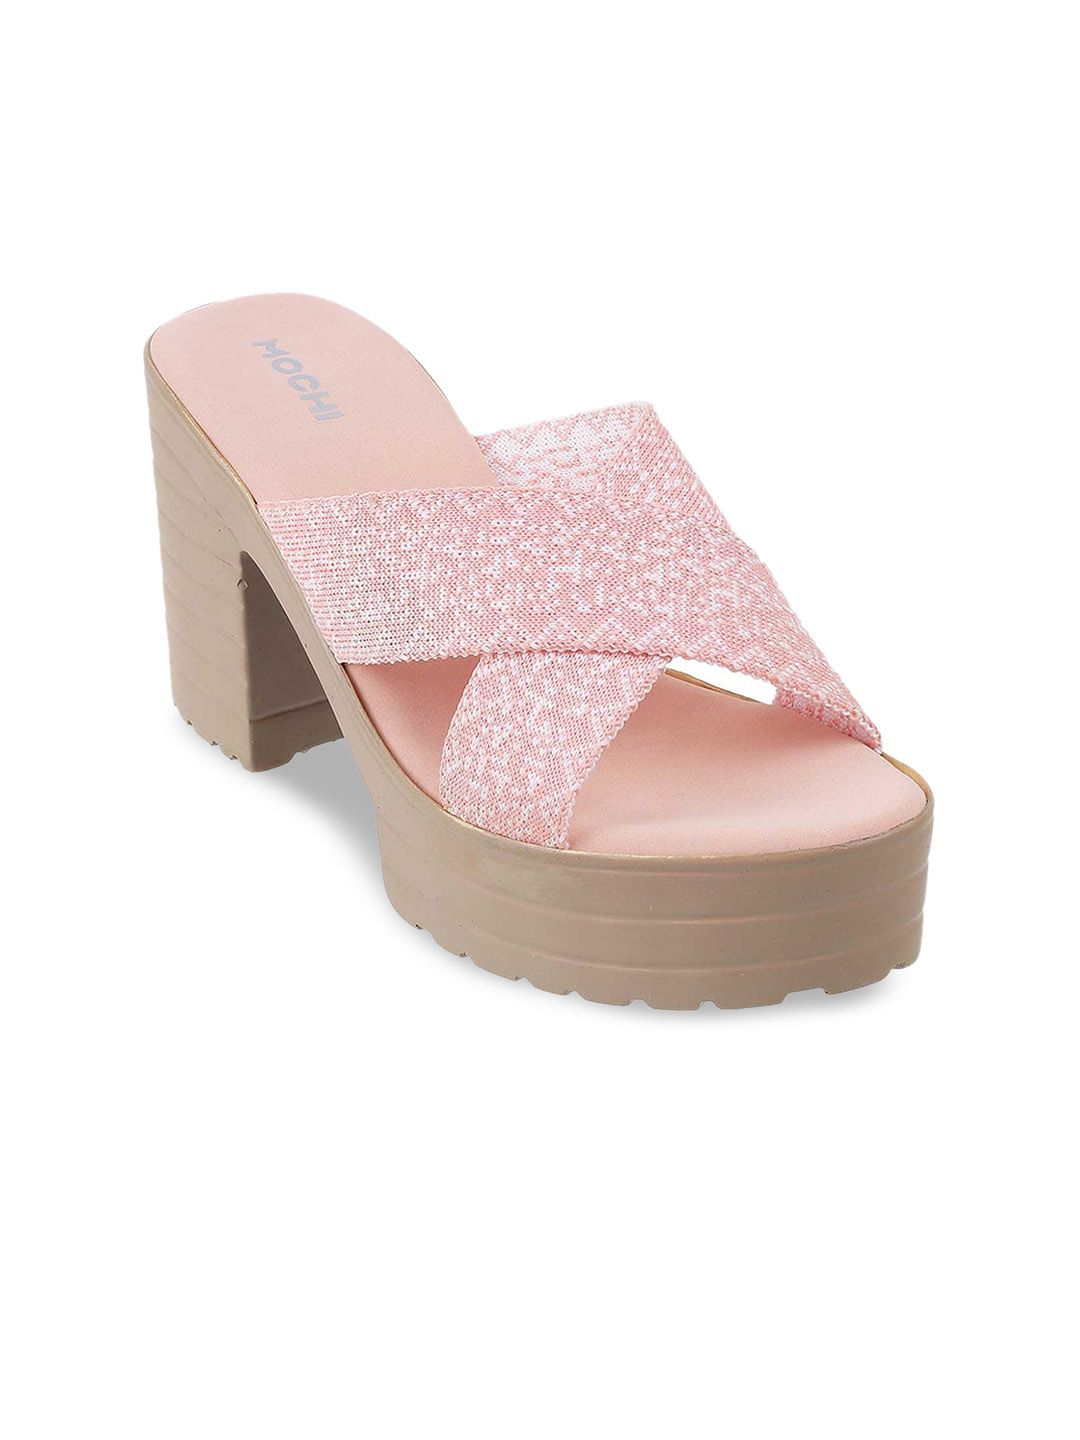 Mochi Pink Block Sandals Price in India